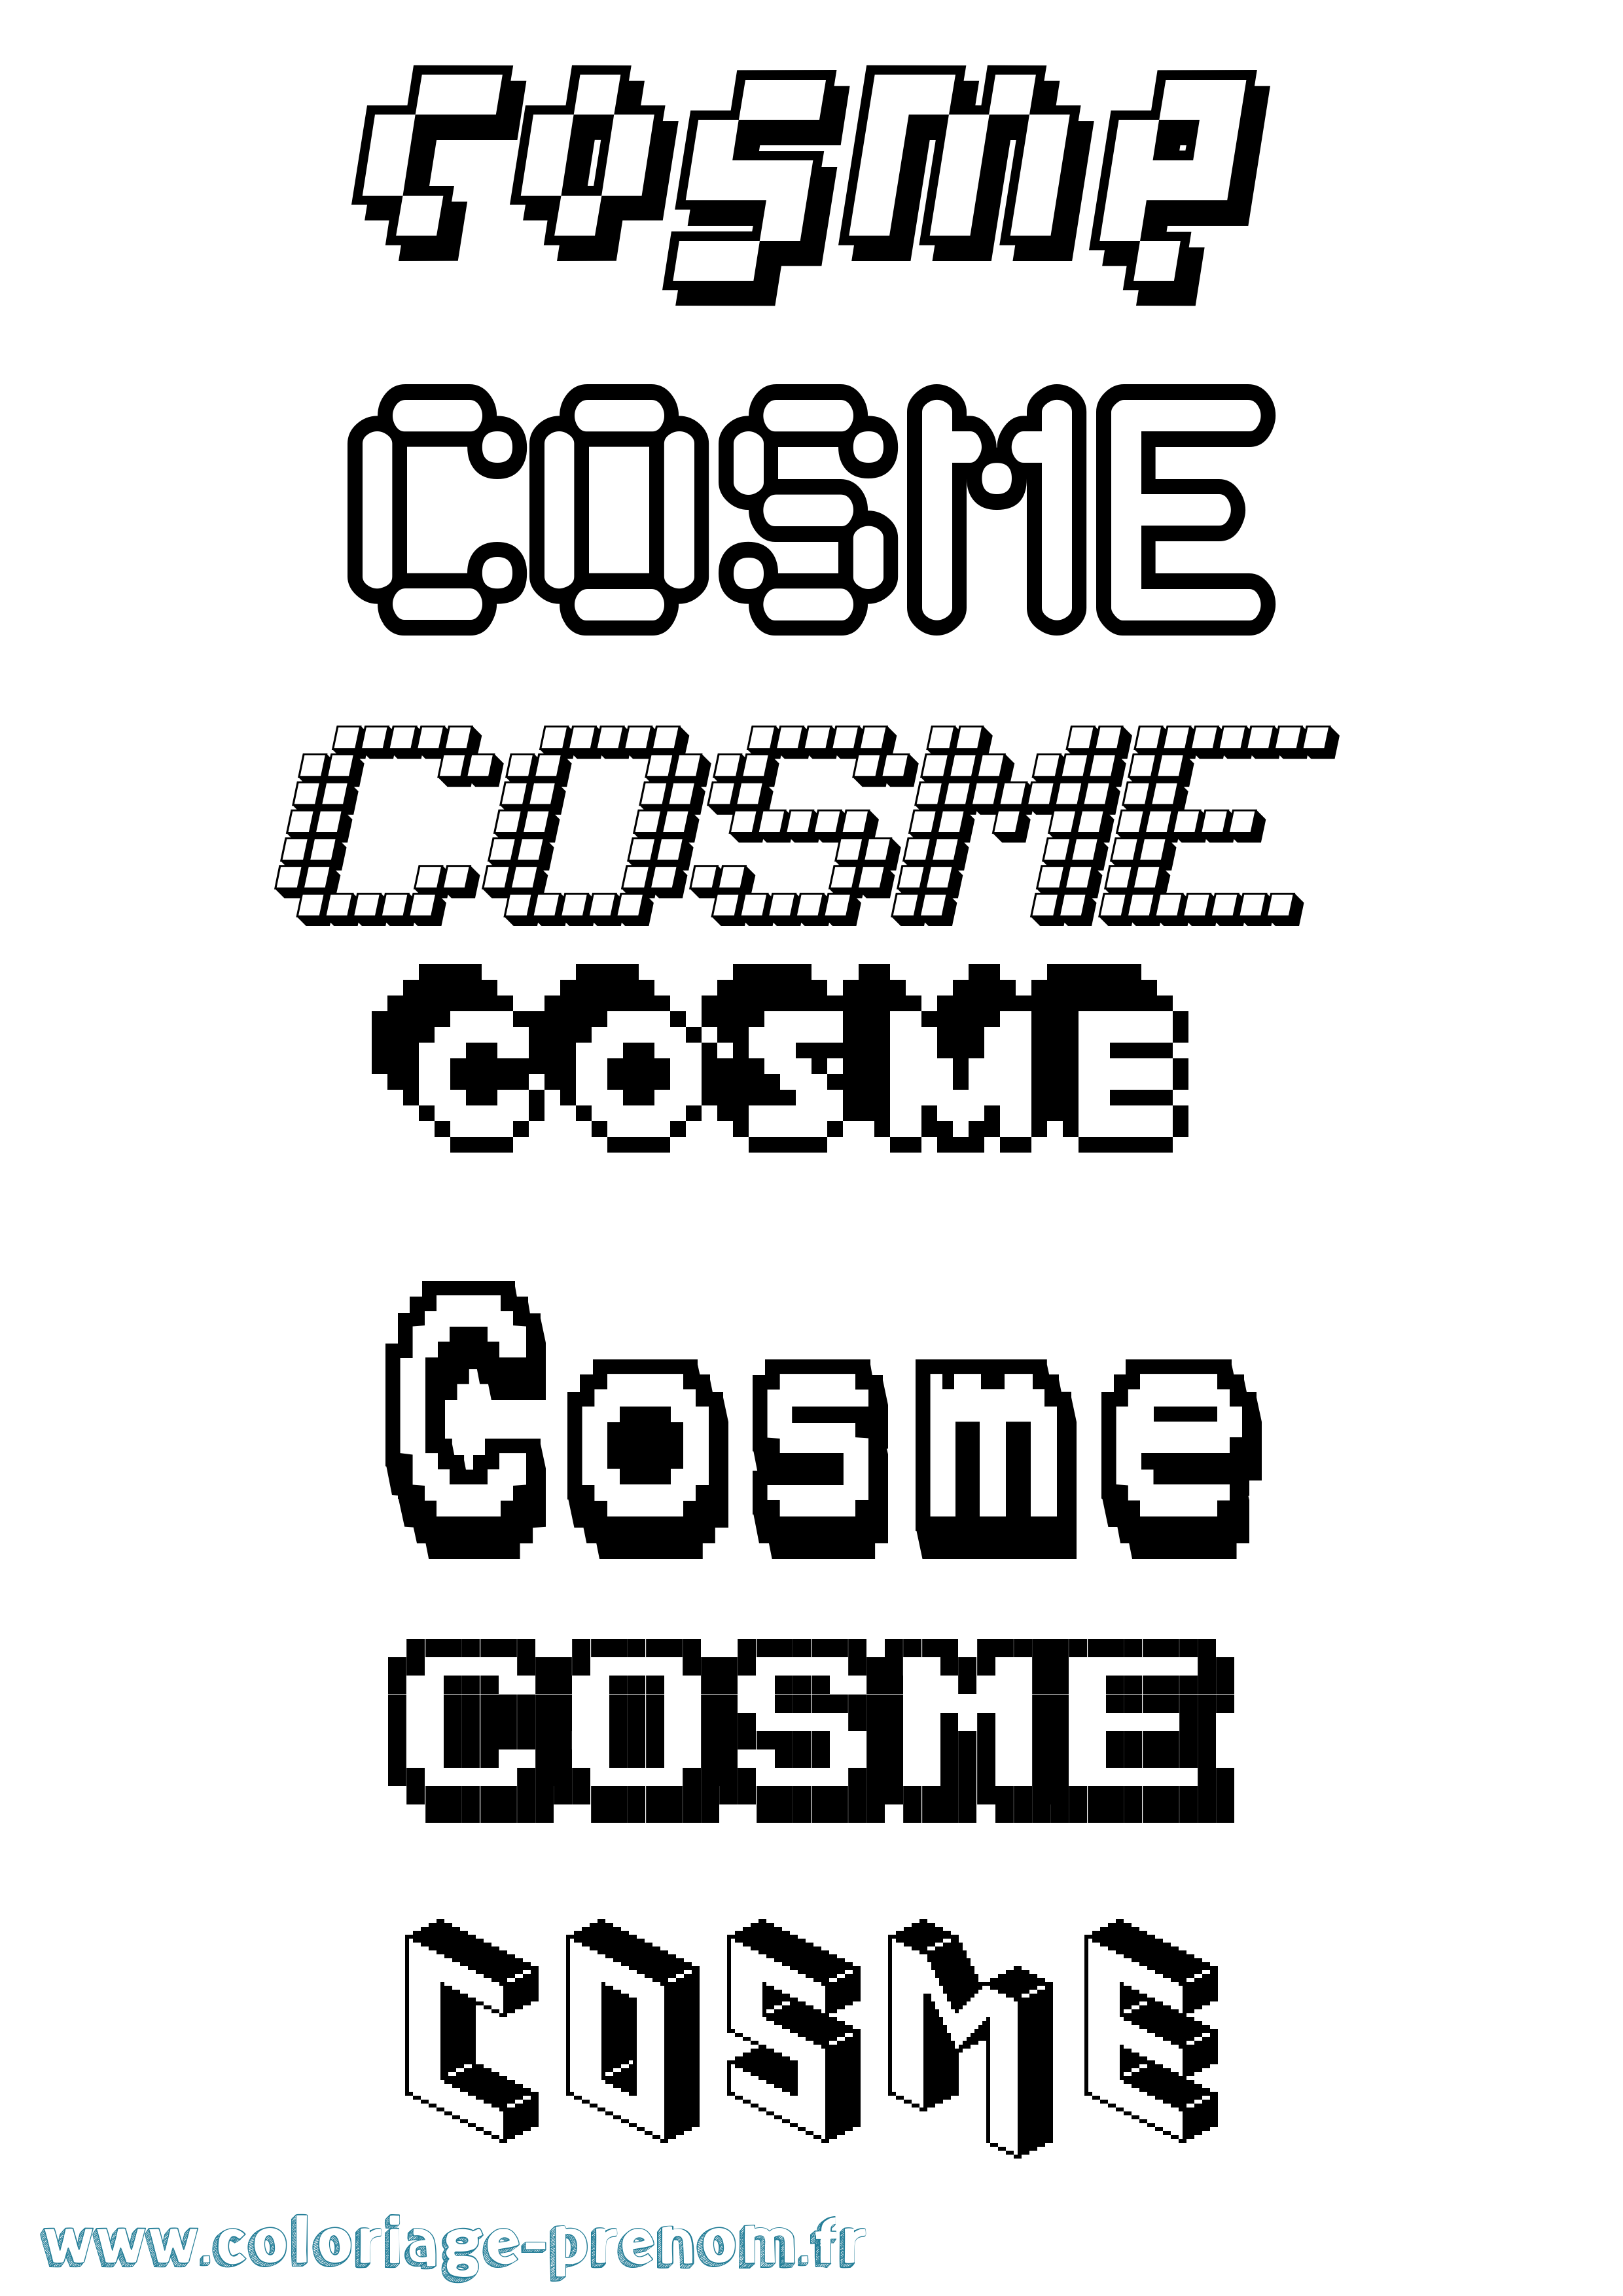 Coloriage prénom Cosme Pixel